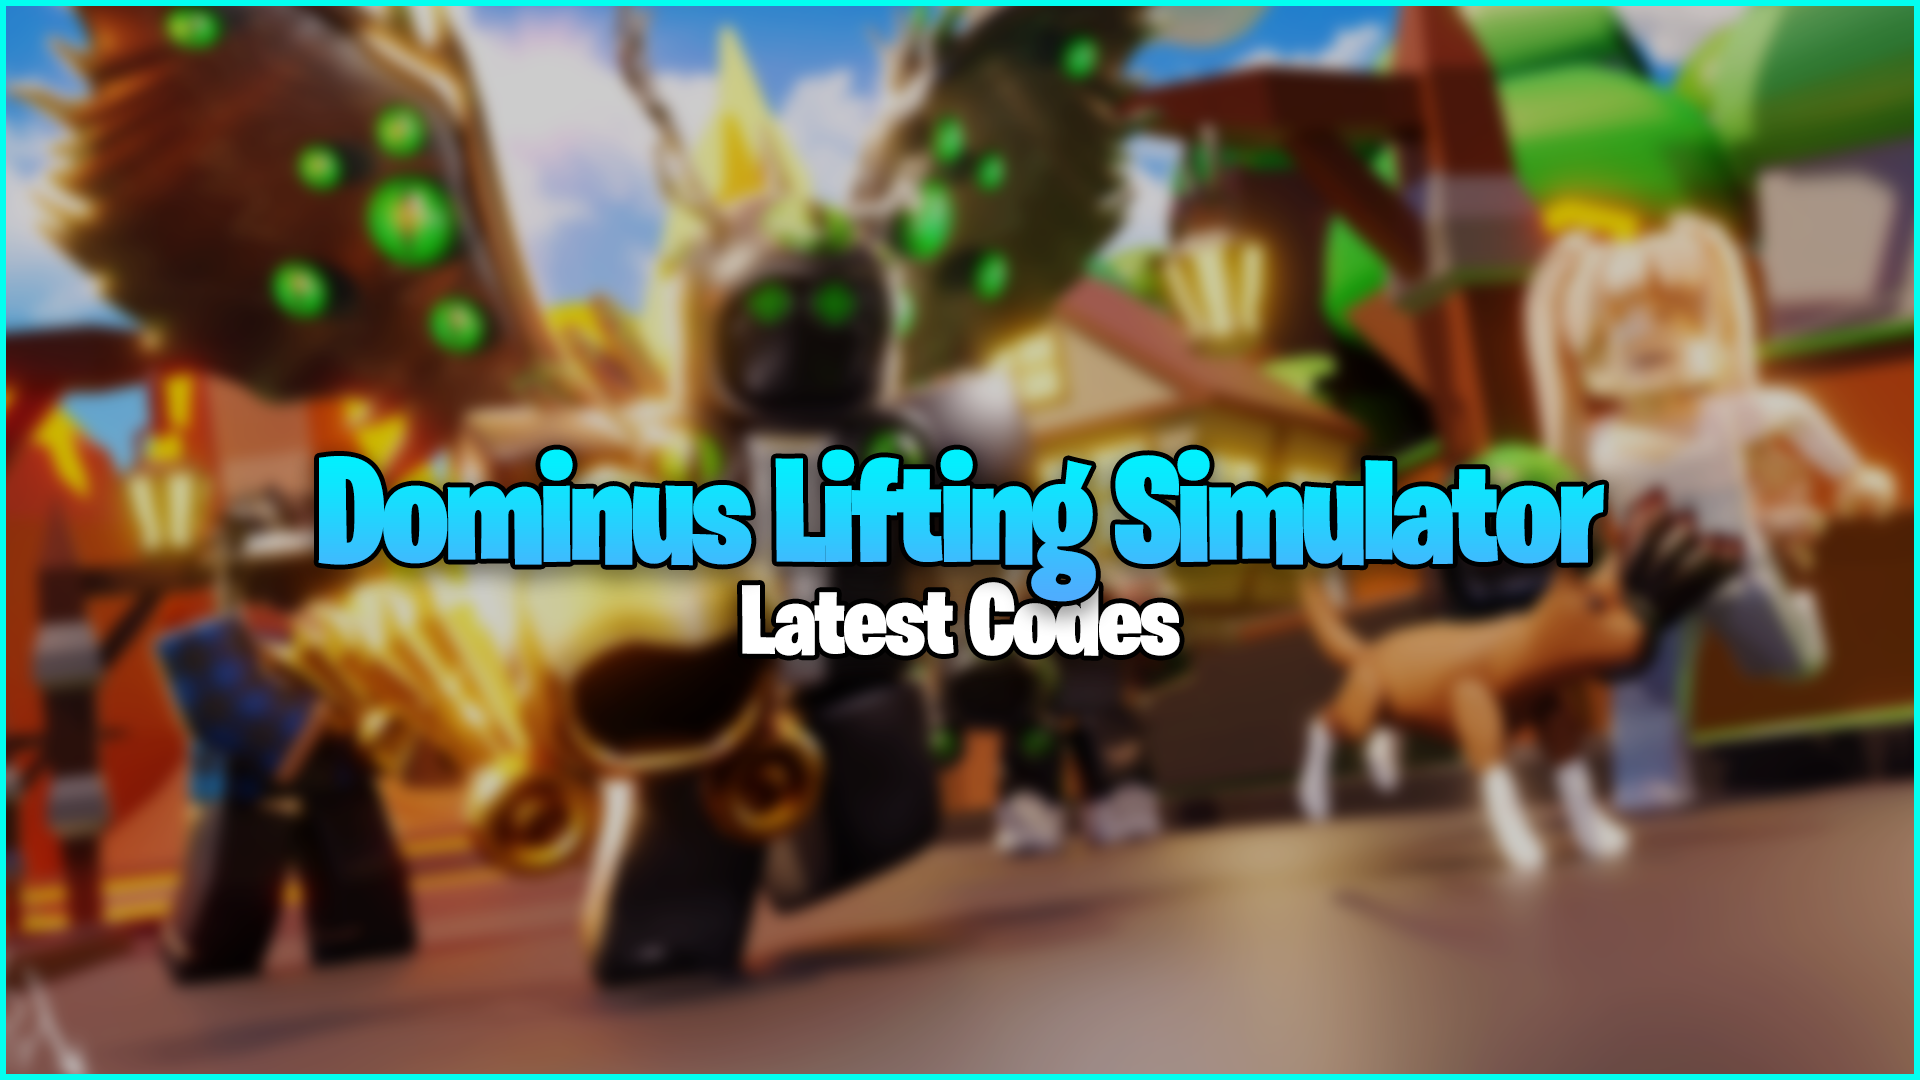 Dominus Lifting Simulator Codes on